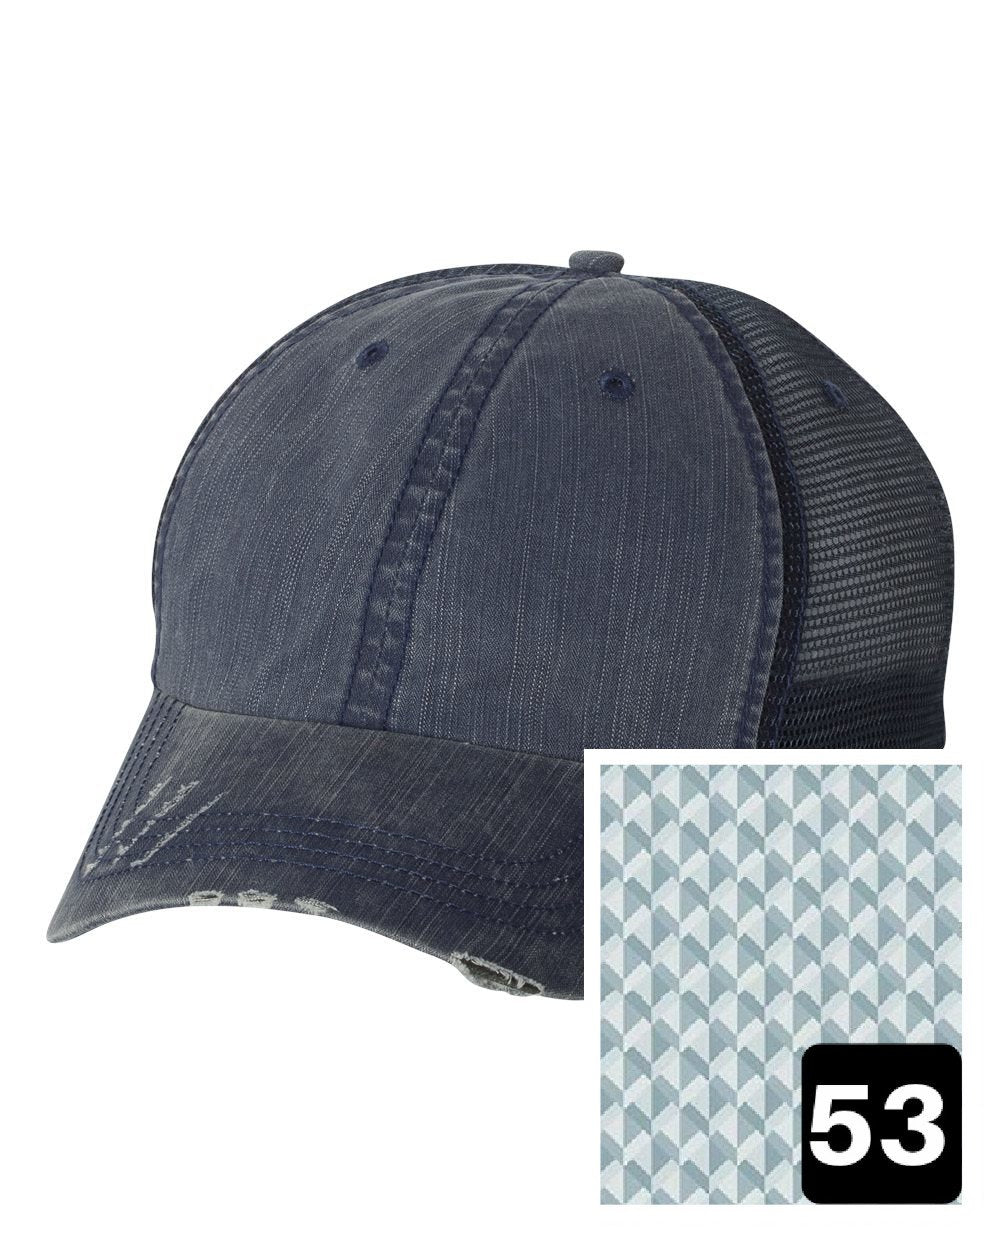 South Dakota Hat - Distressed Ponytail or Messy Bun Hat  - Many Fabric Choices